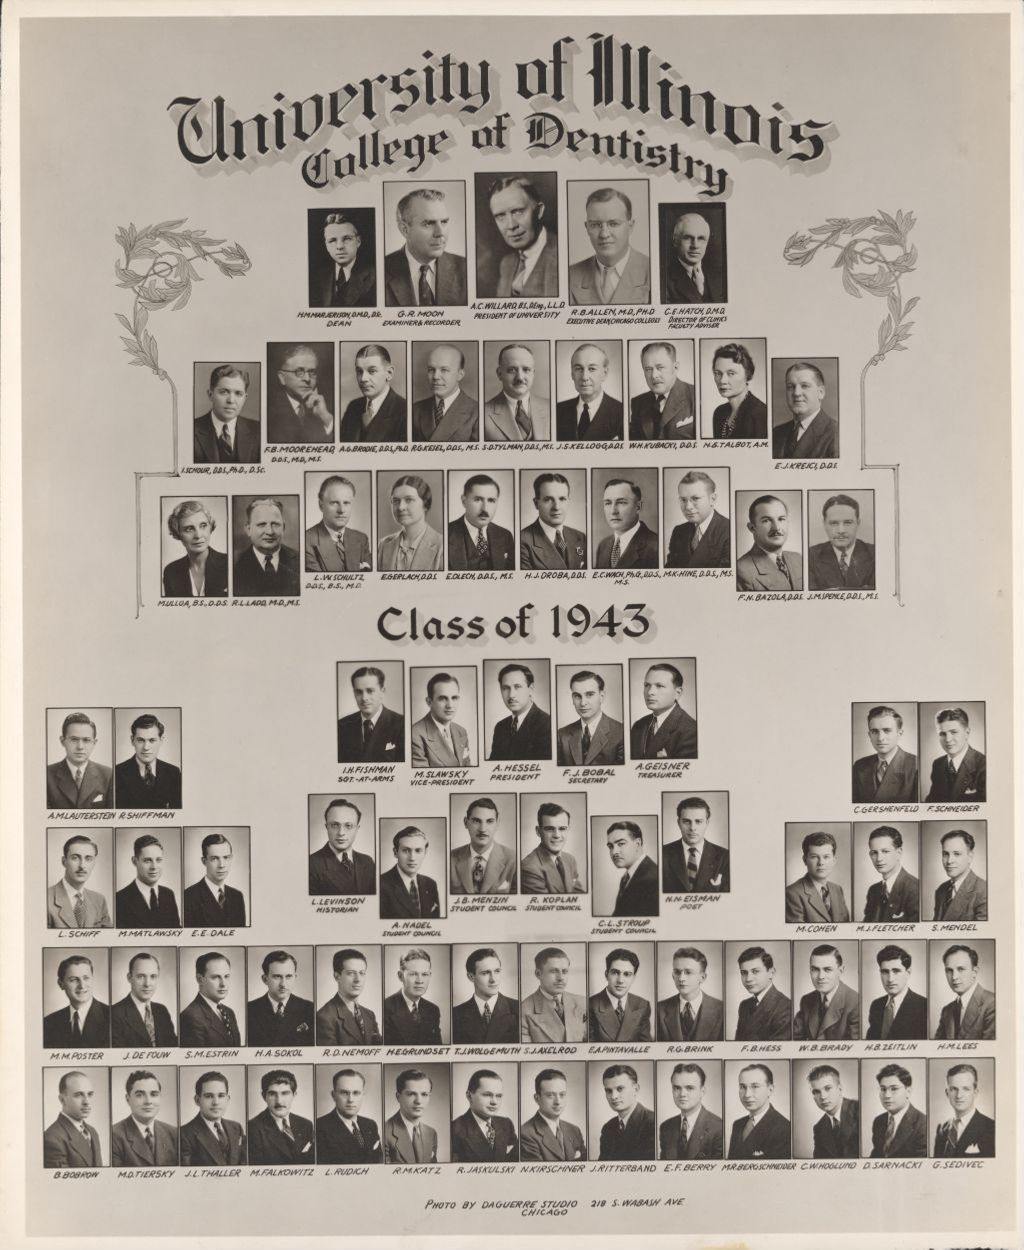 Miniature of 1943 graduating class, University of Illinois College of Dentistry